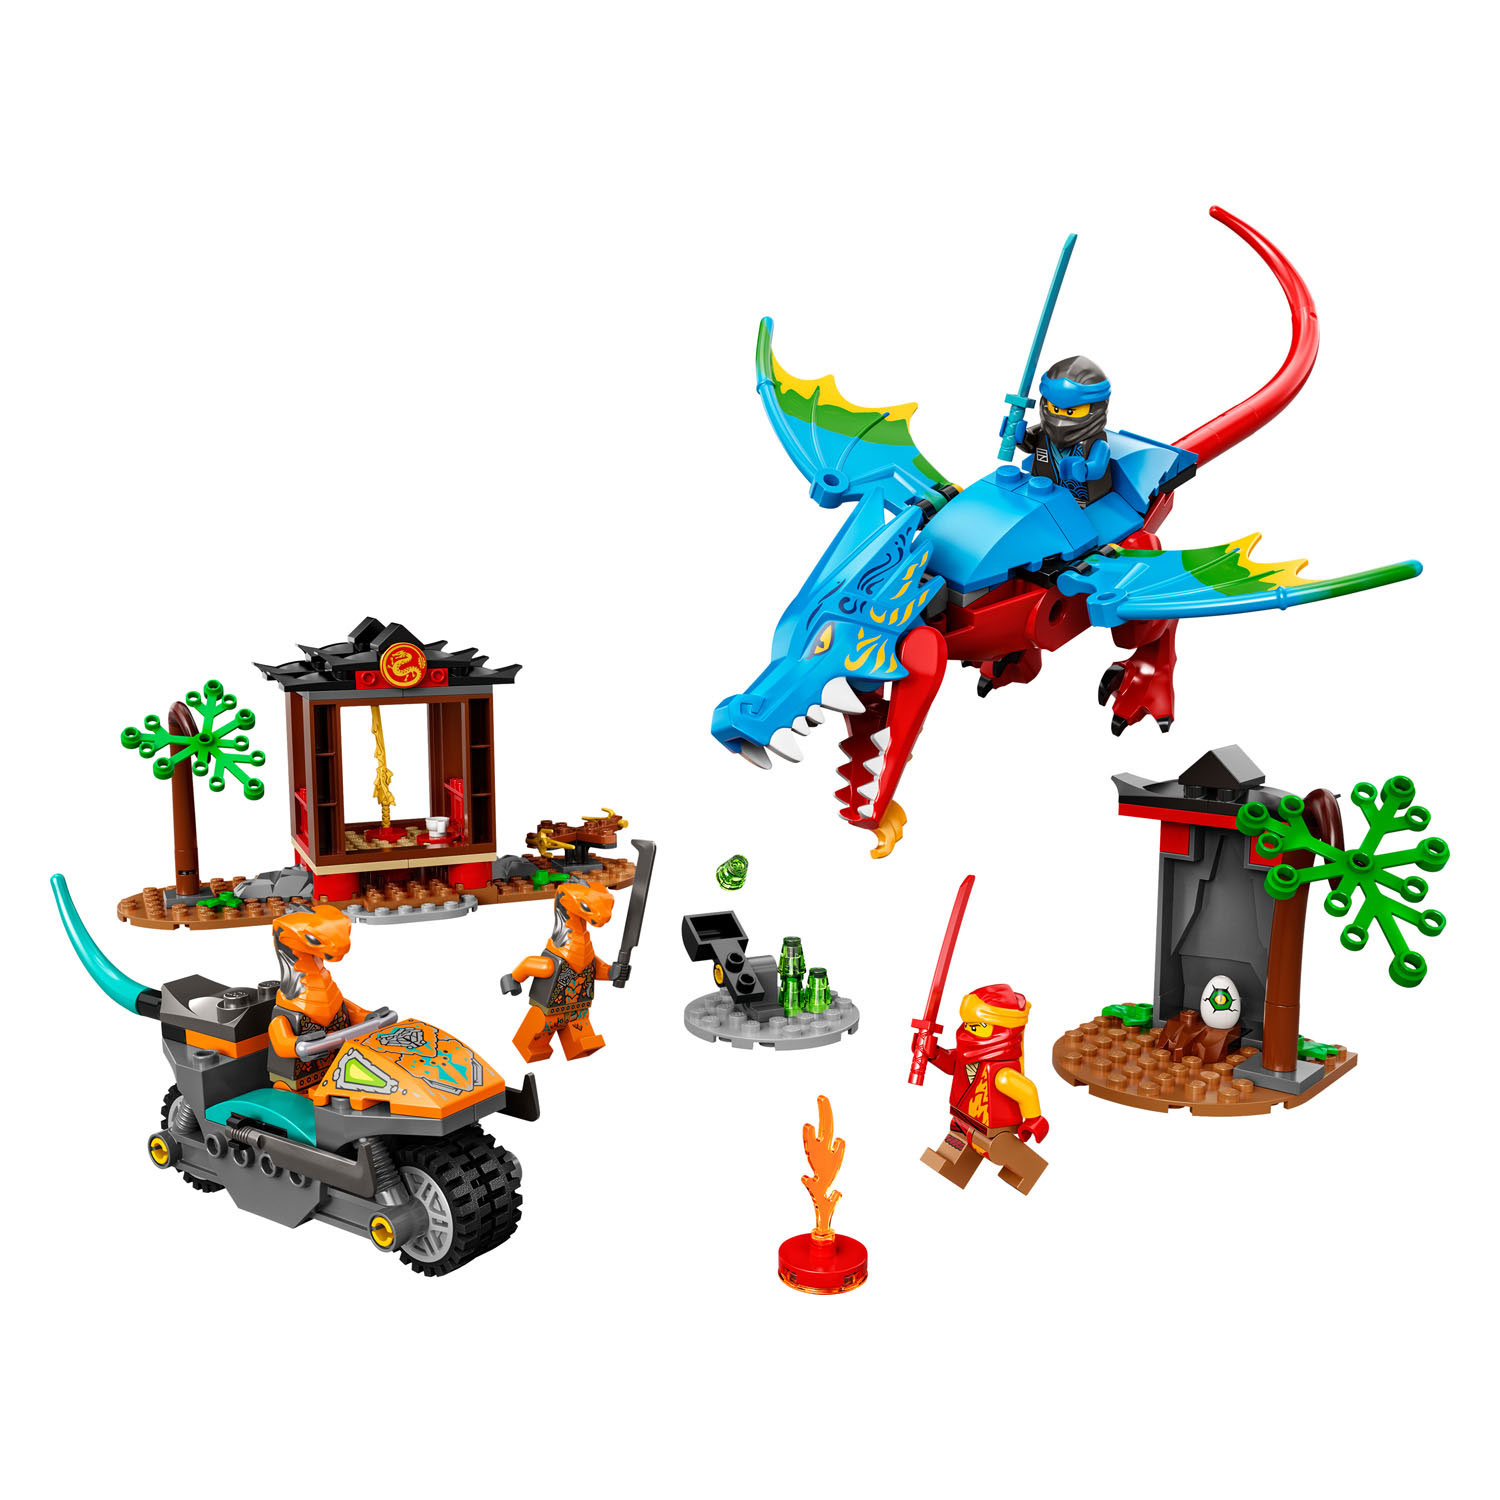 LEGO NINJAGO Ninja drakentempel - 71759